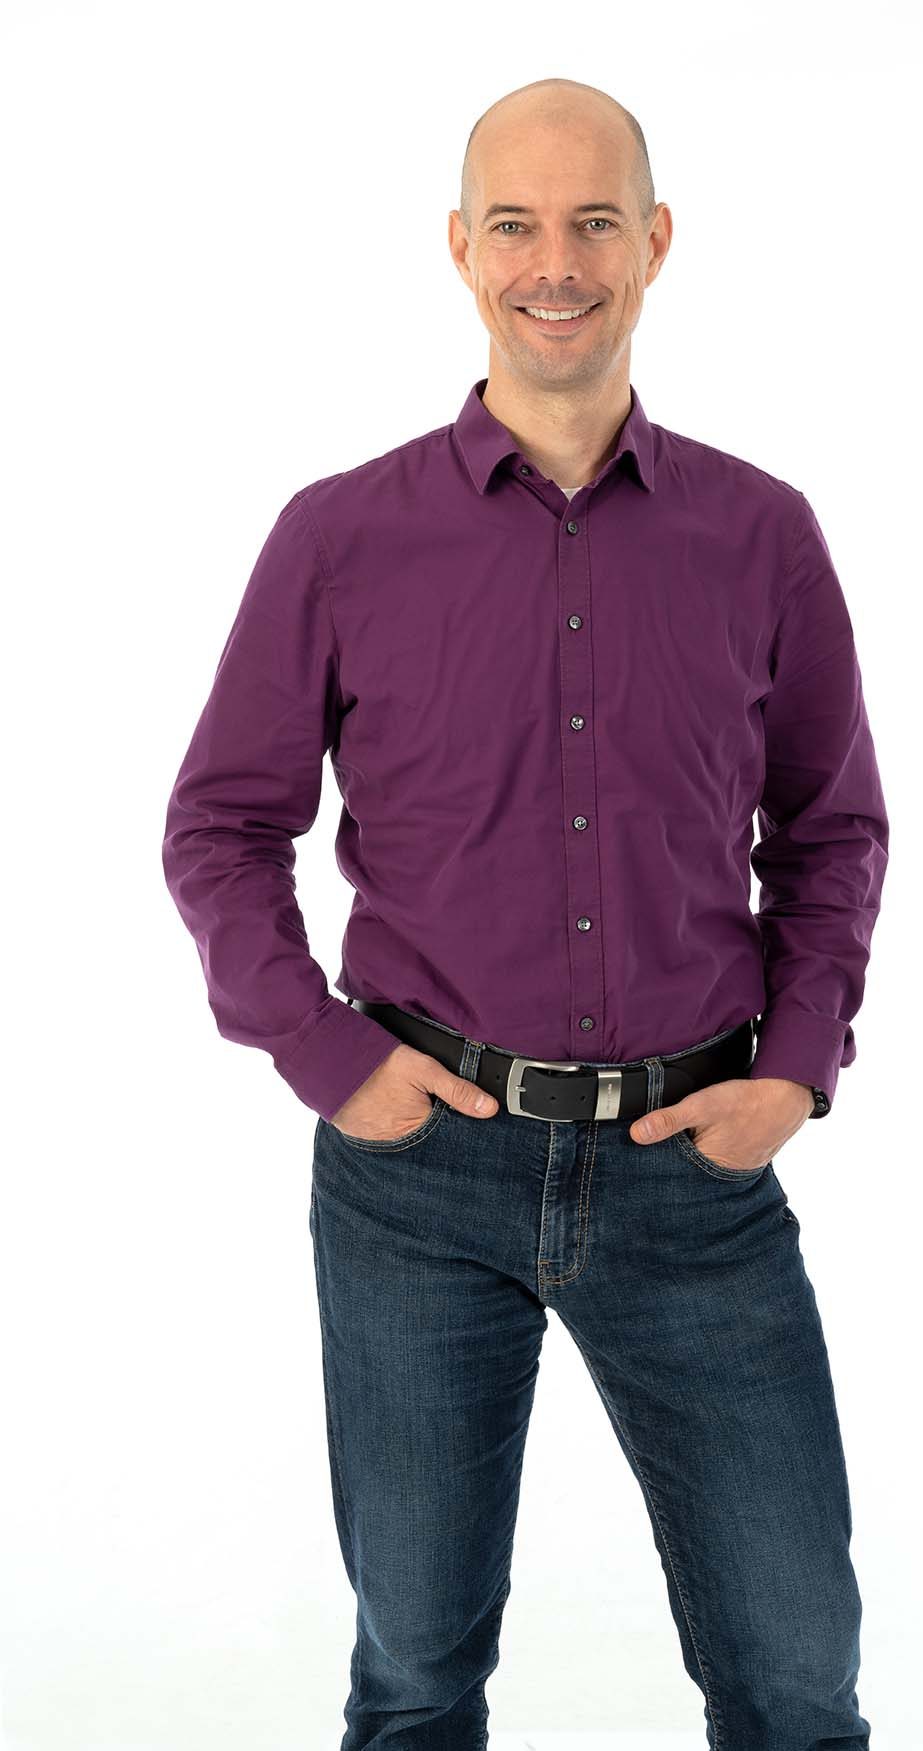 Sebastian Kremser stehend in Jeans und dunkel-violettem Hemd